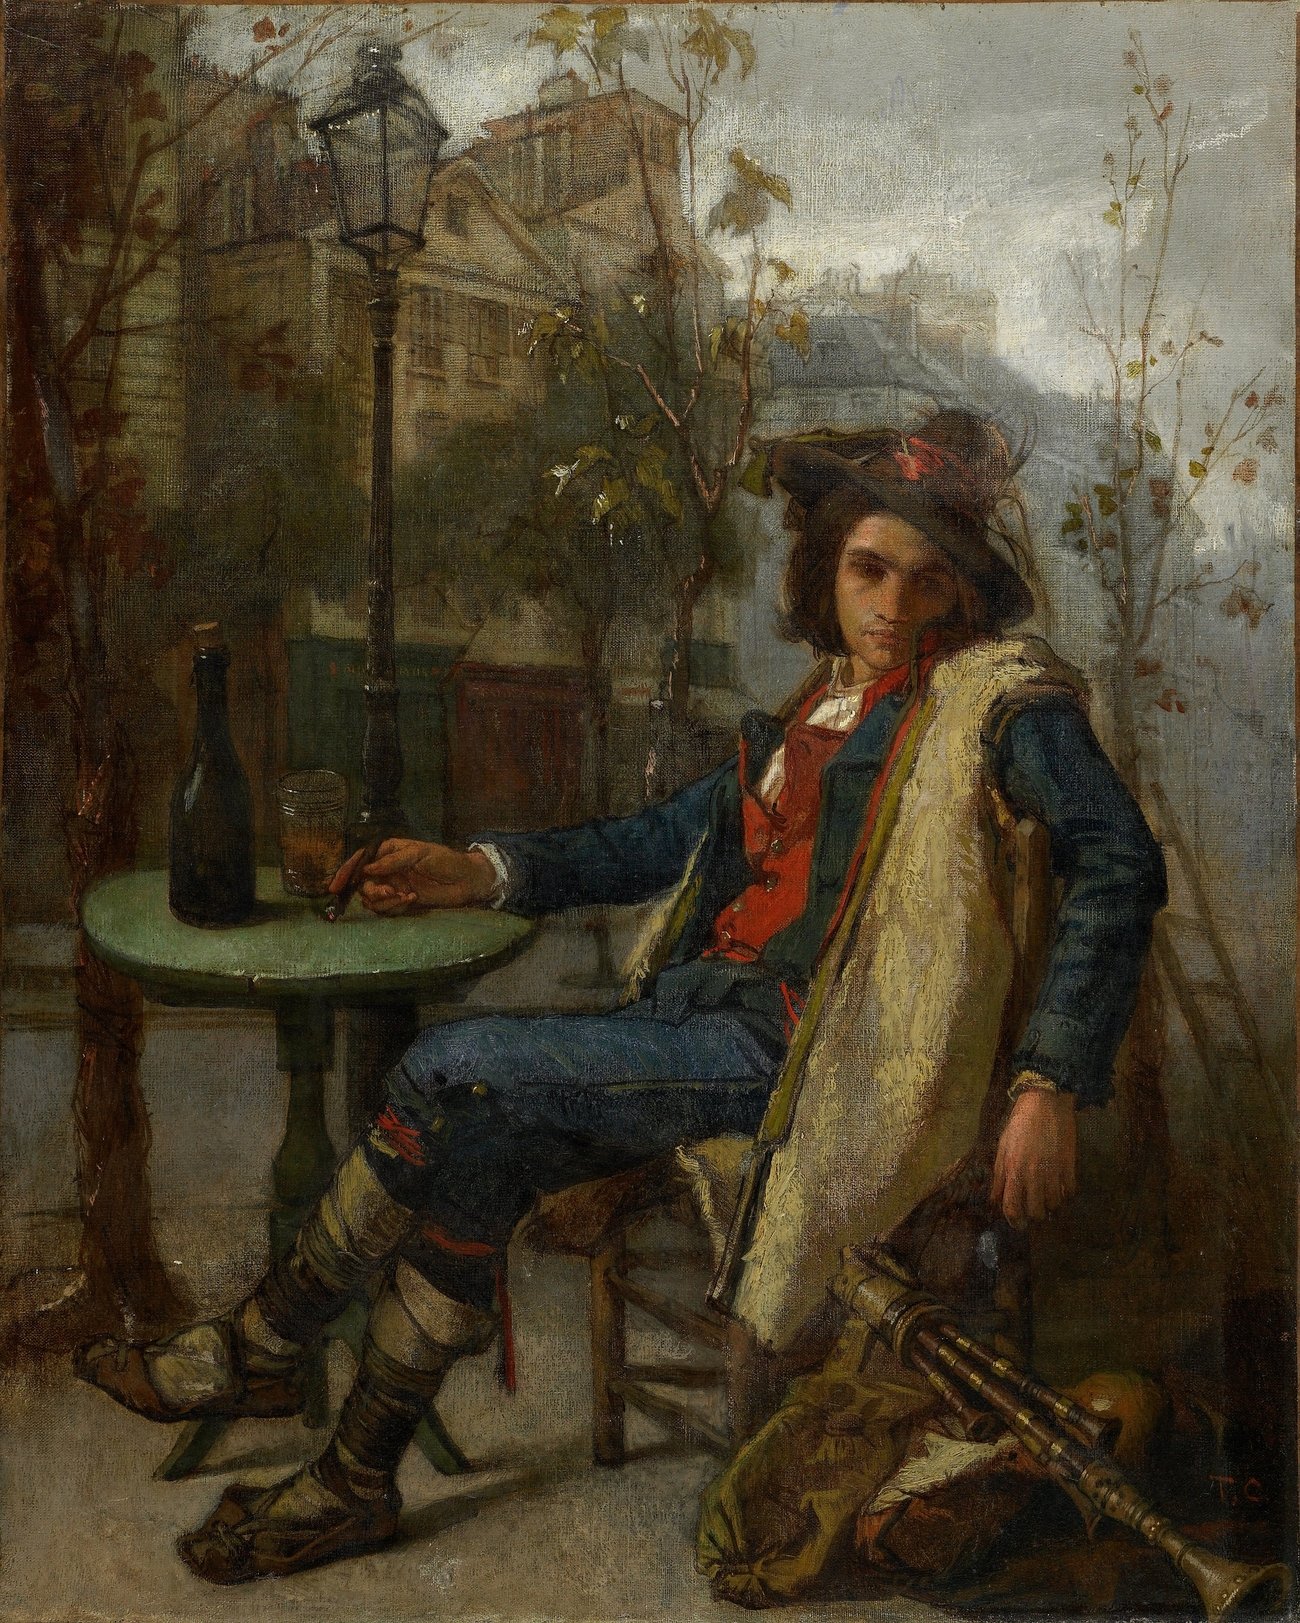 Young Italian Street Musician (c. 1877)